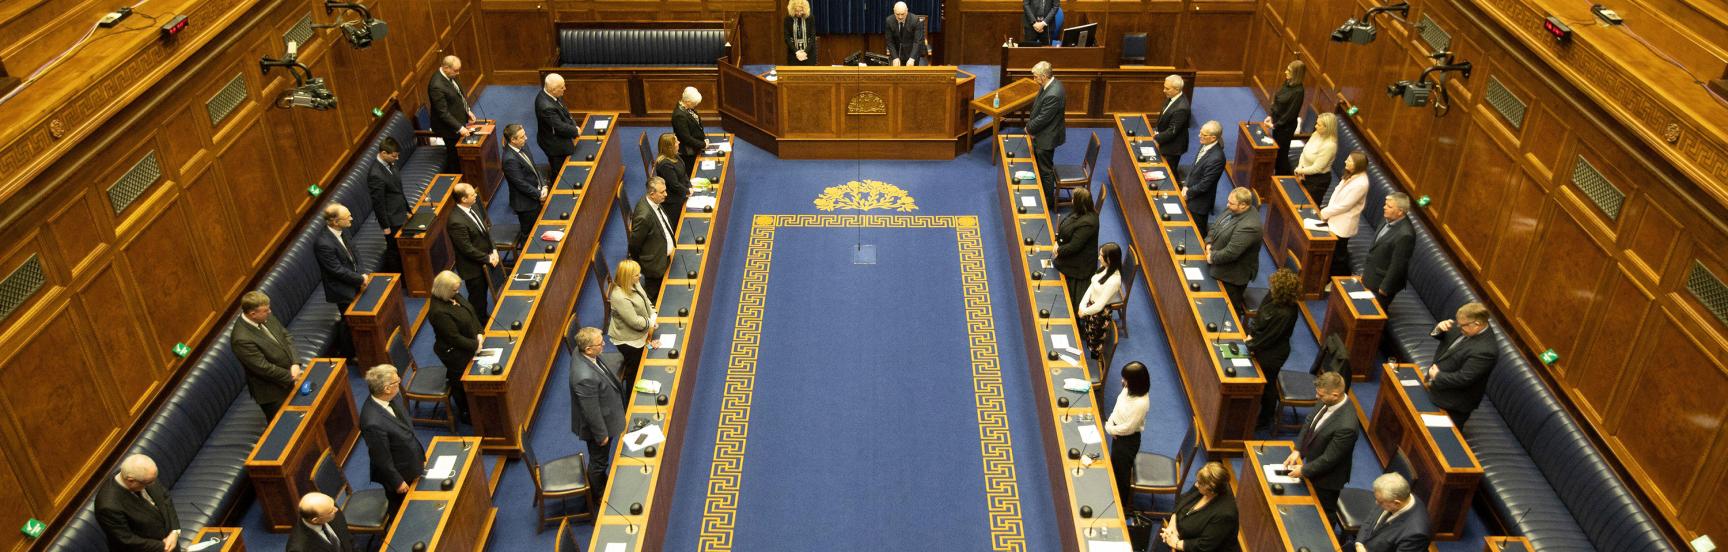 Northern Ireland Assembly chamber